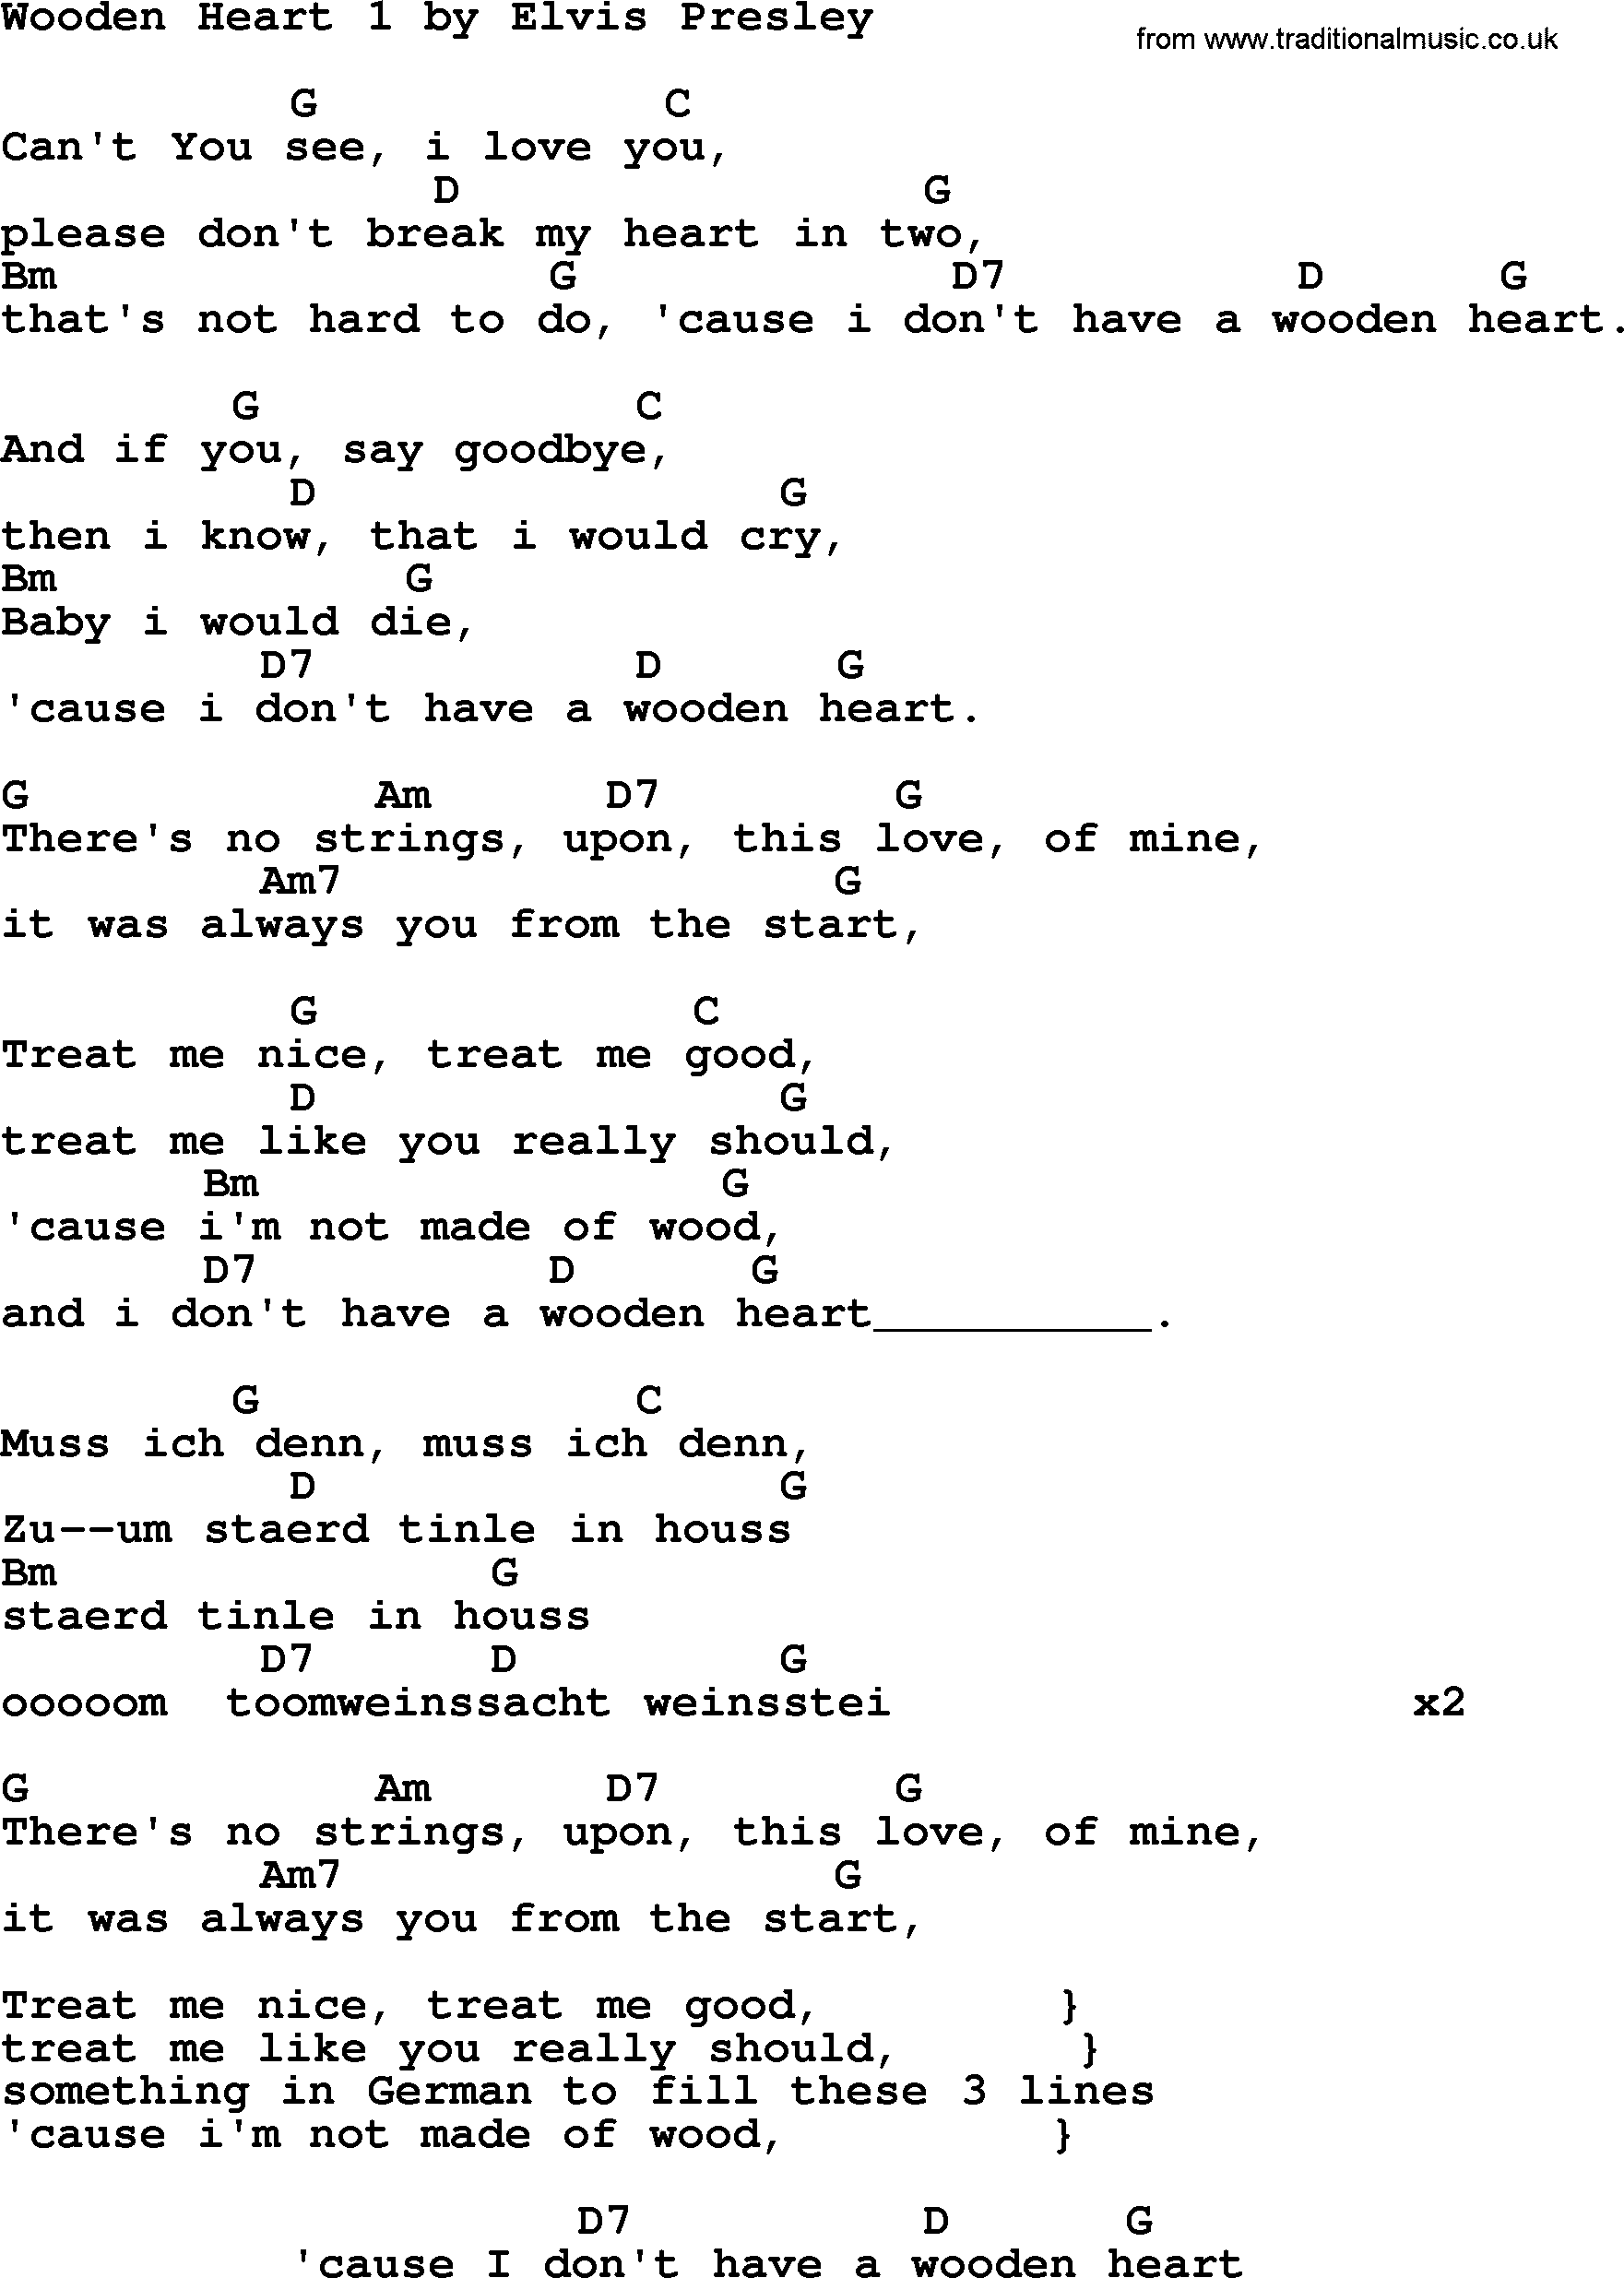 Elvis Presley song: Wooden Heart 1, lyrics and chords